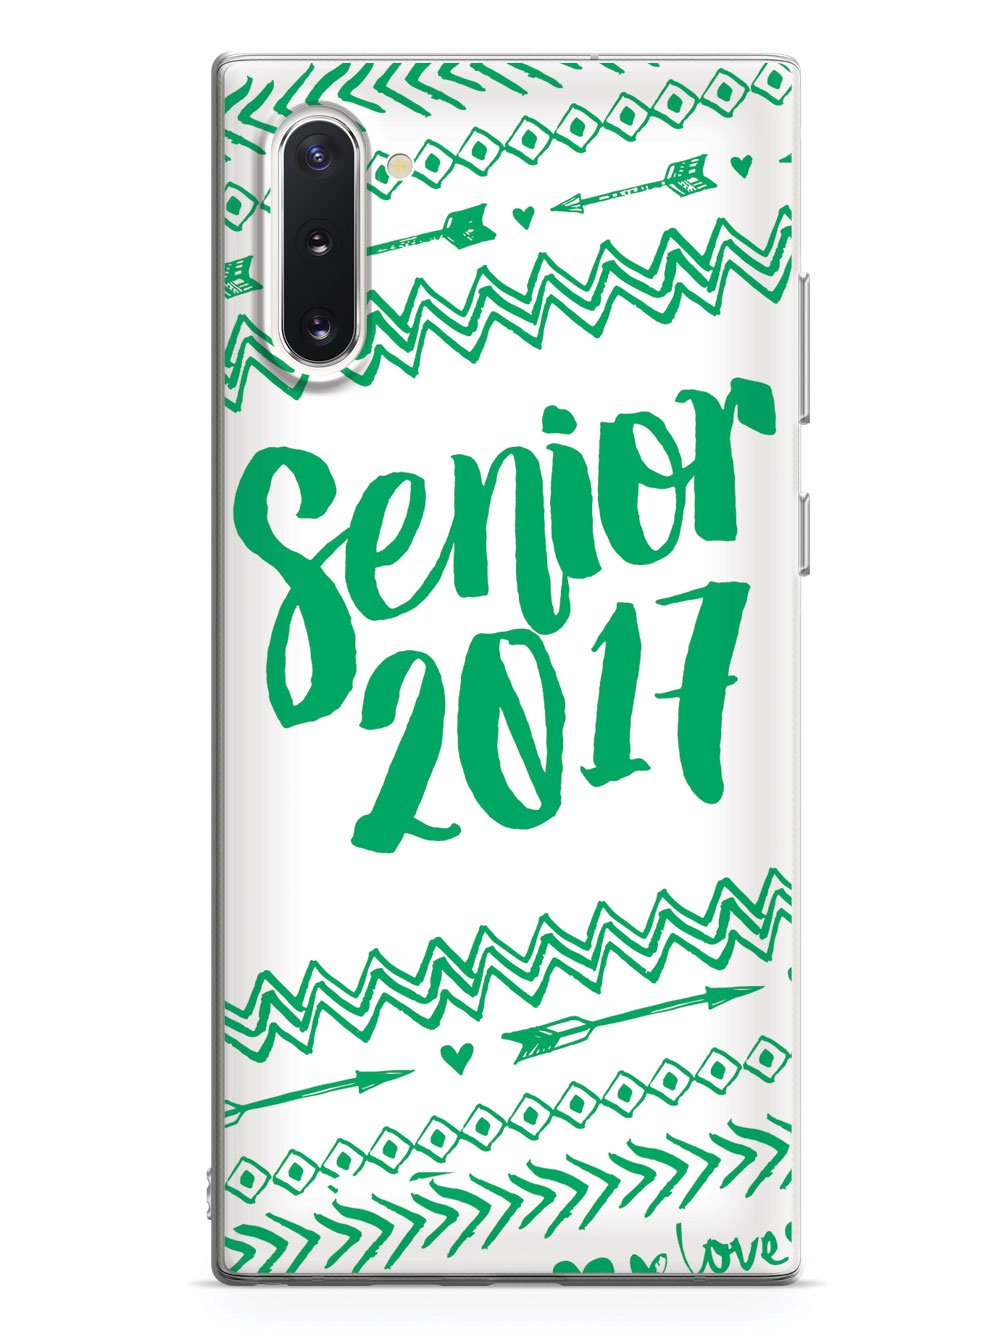 Senior 2017 - Green Case - pipercleo.com